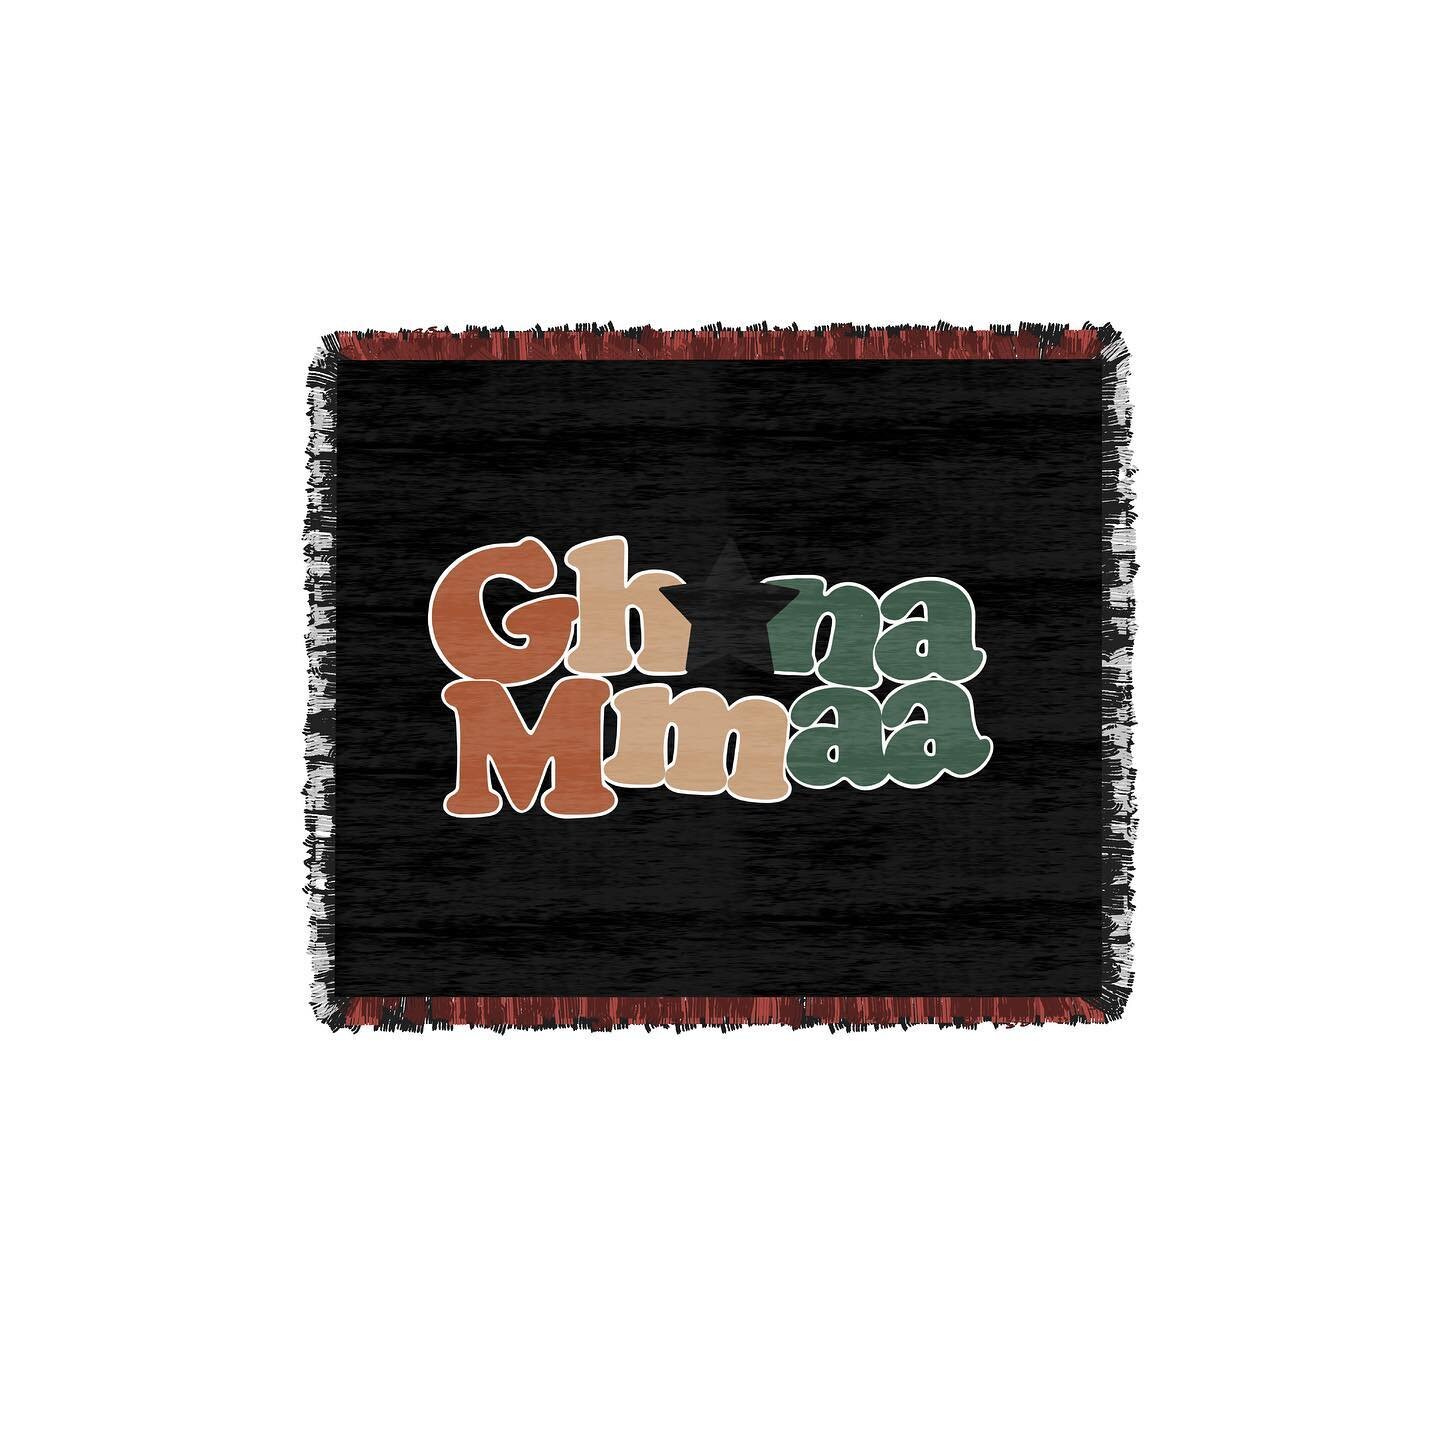 Ghana Mmaa - Throw Blanket (50 x 60)

Now Available @ www.YeWoKrom.com

&bull;
&bull;
&bull; 

#rawmelanin #afropunk #afrochella #chalewote #kumasi #kumasigirls #kumasighana #complexsneakers #ghana #ghanafashion #ghana🇬🇭 #ghanastyle #ghanafuo #yewo